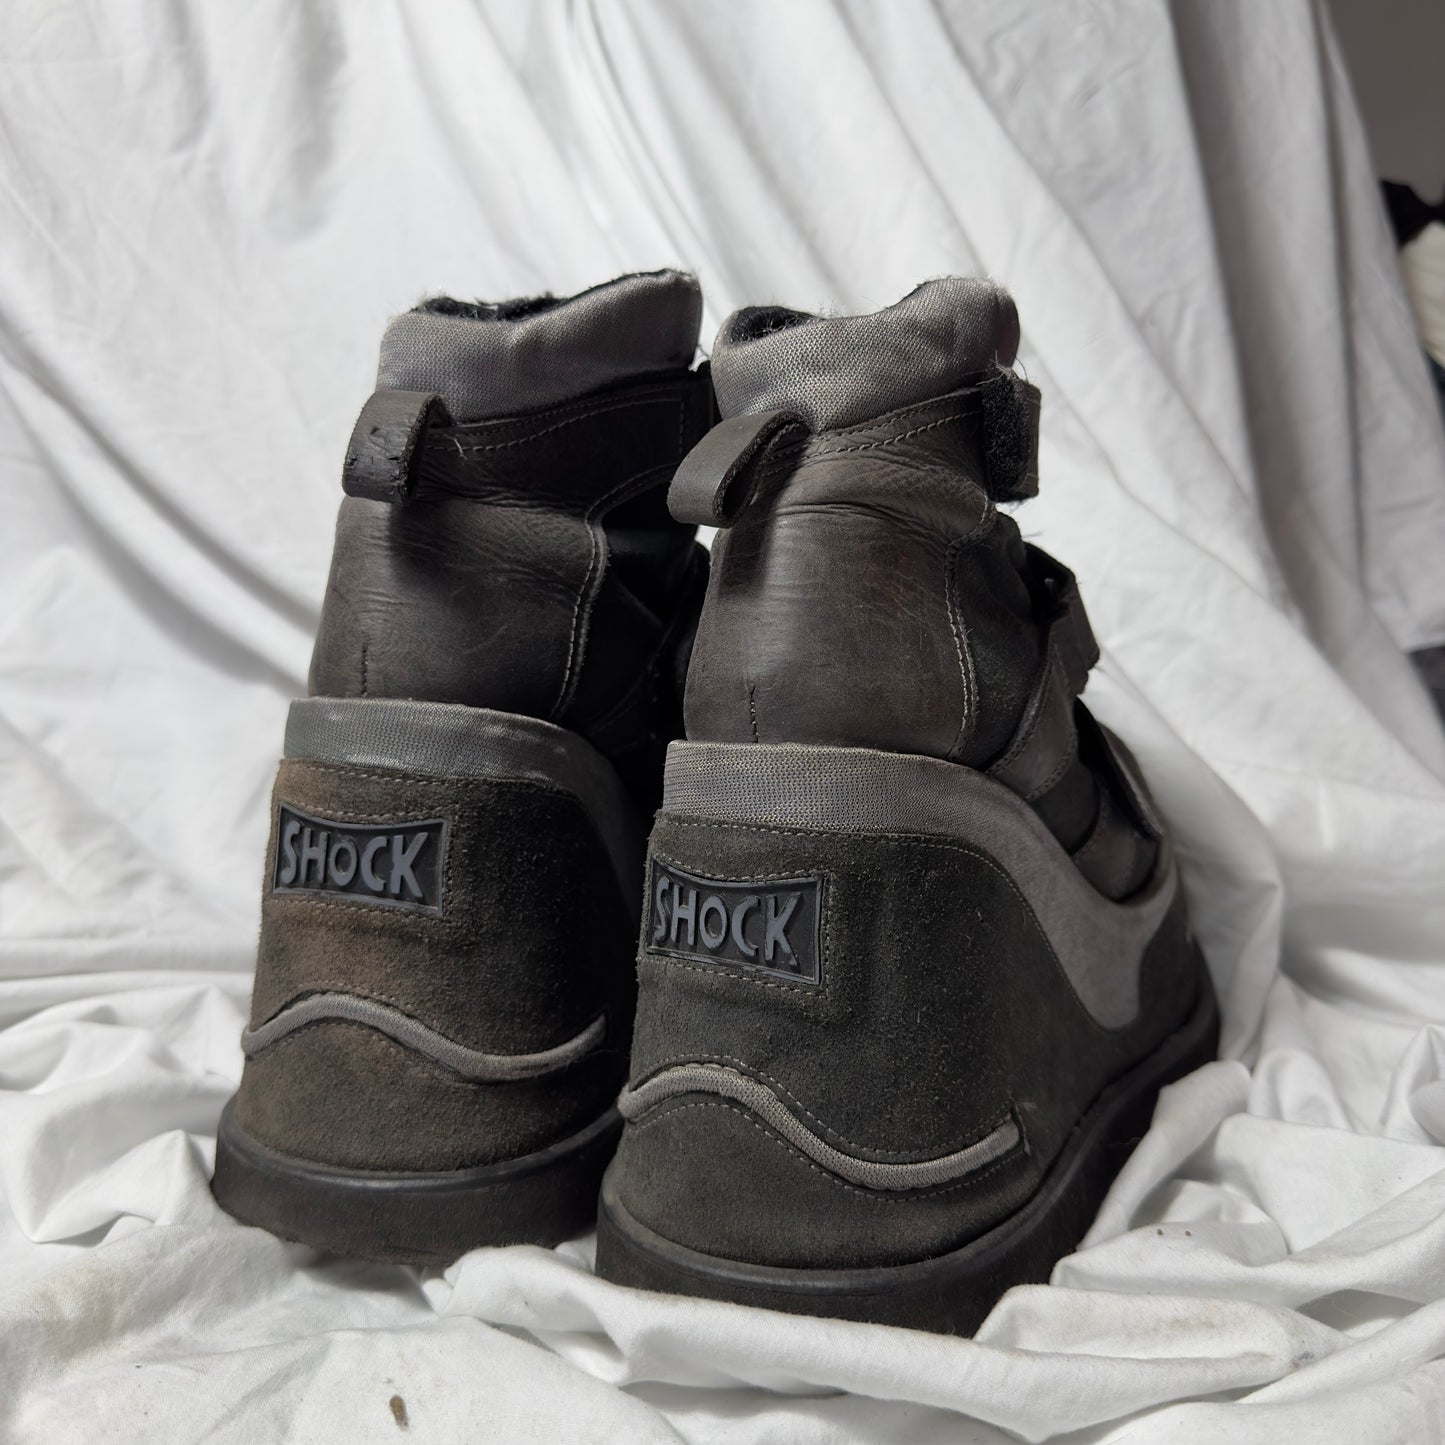 Shock Vintage 90s chunky platform boots